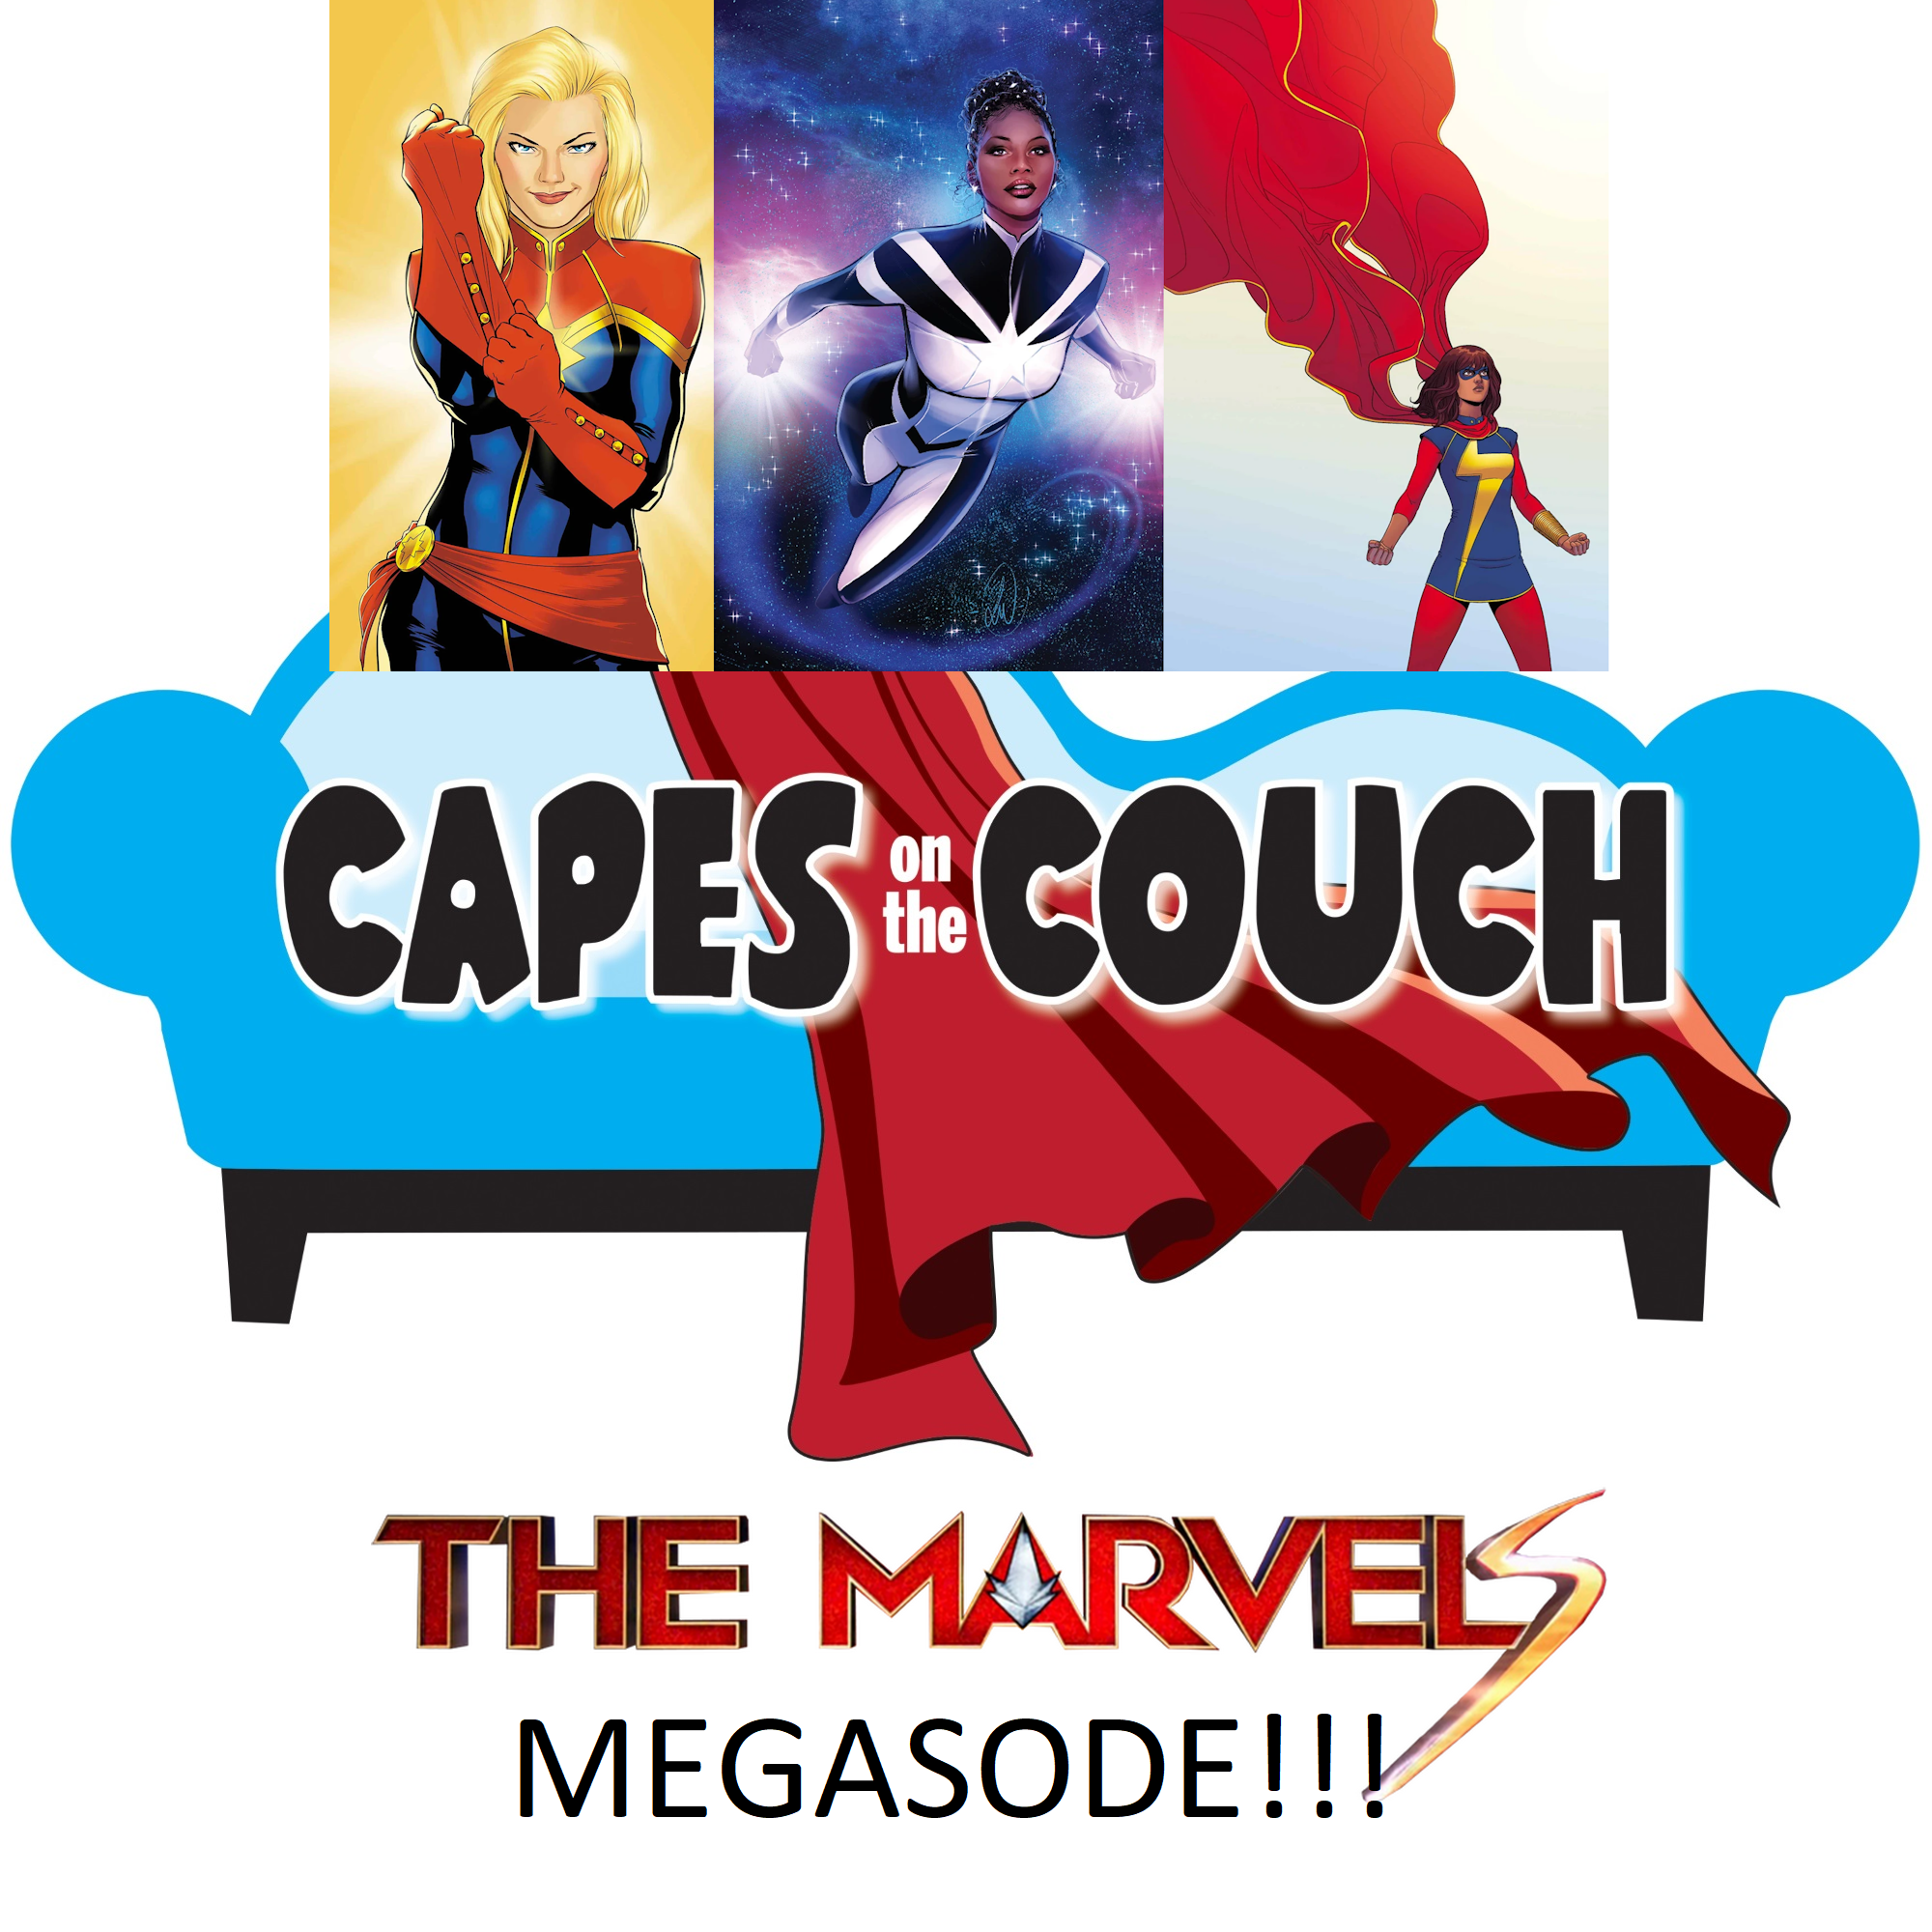 Marvels Megasode post thumbnail image